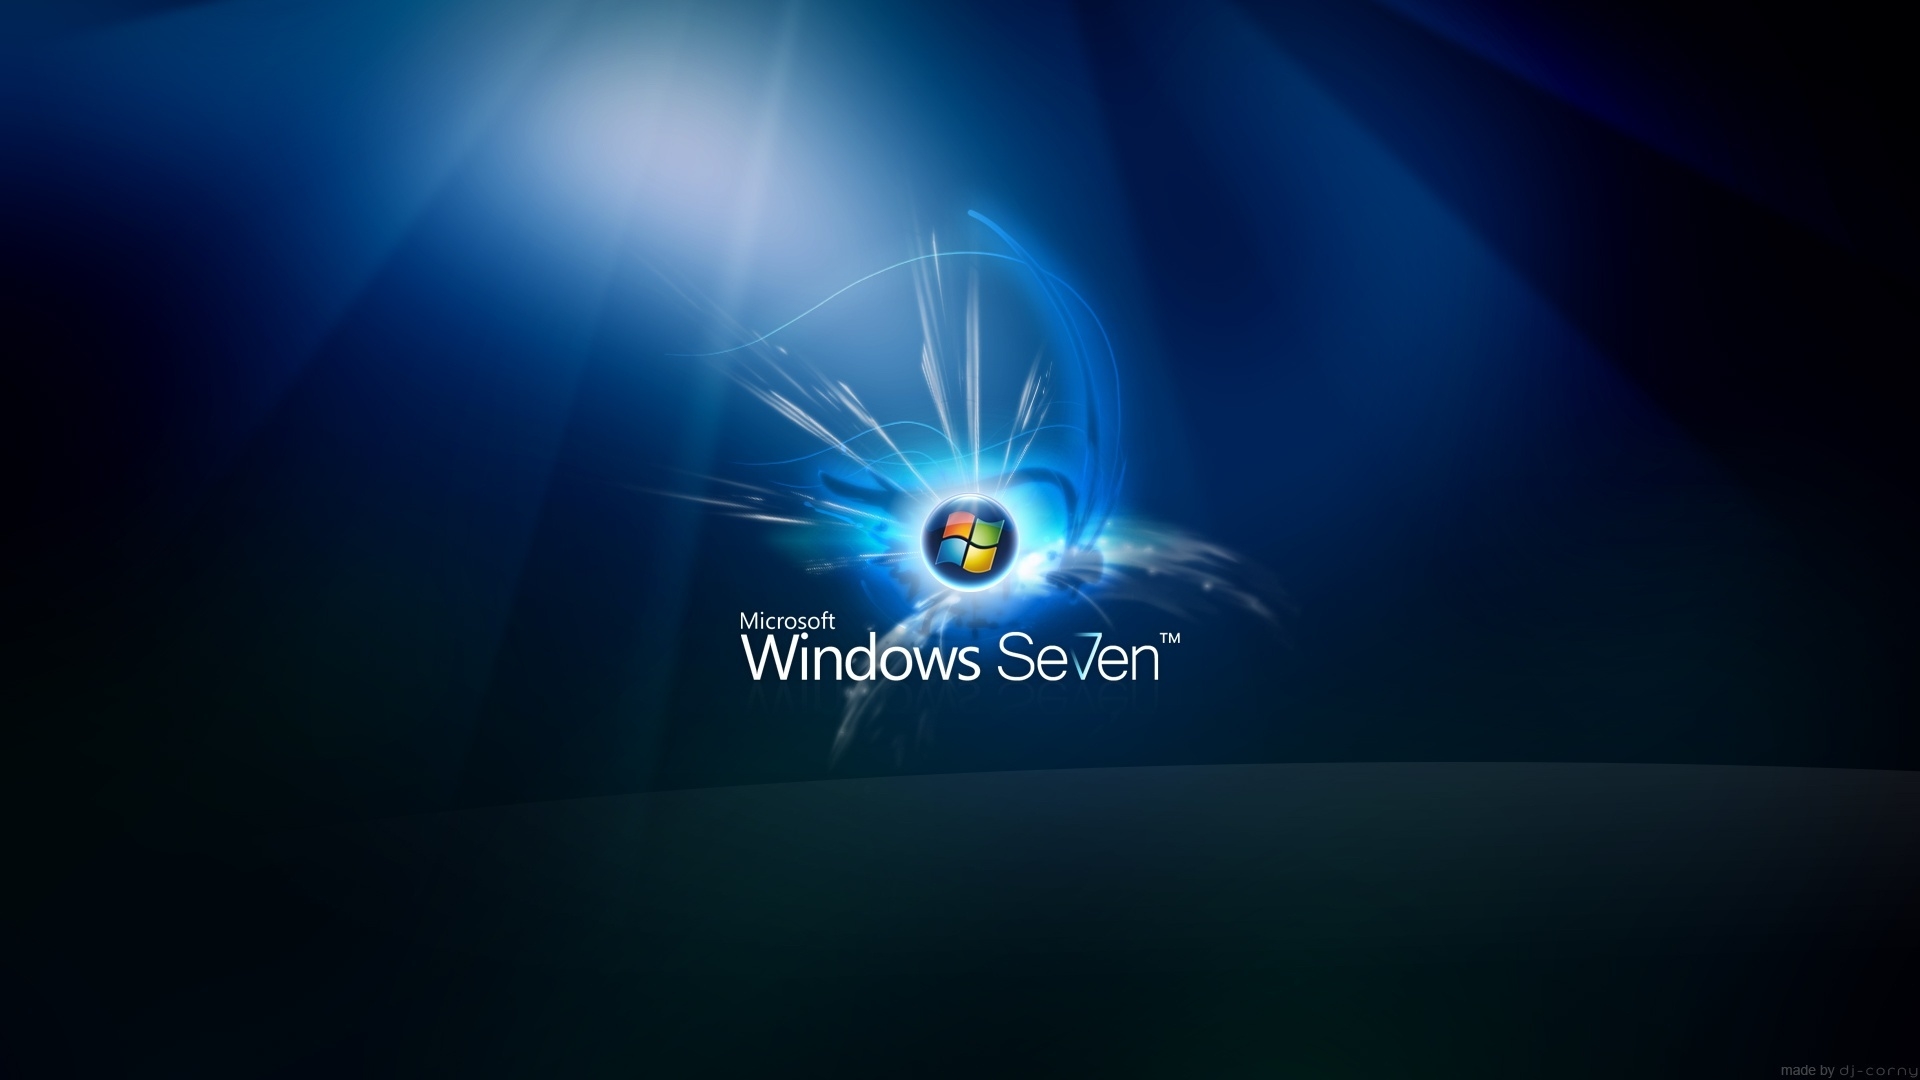 Windows Seven Glow for 1920 x 1080 HDTV 1080p resolution